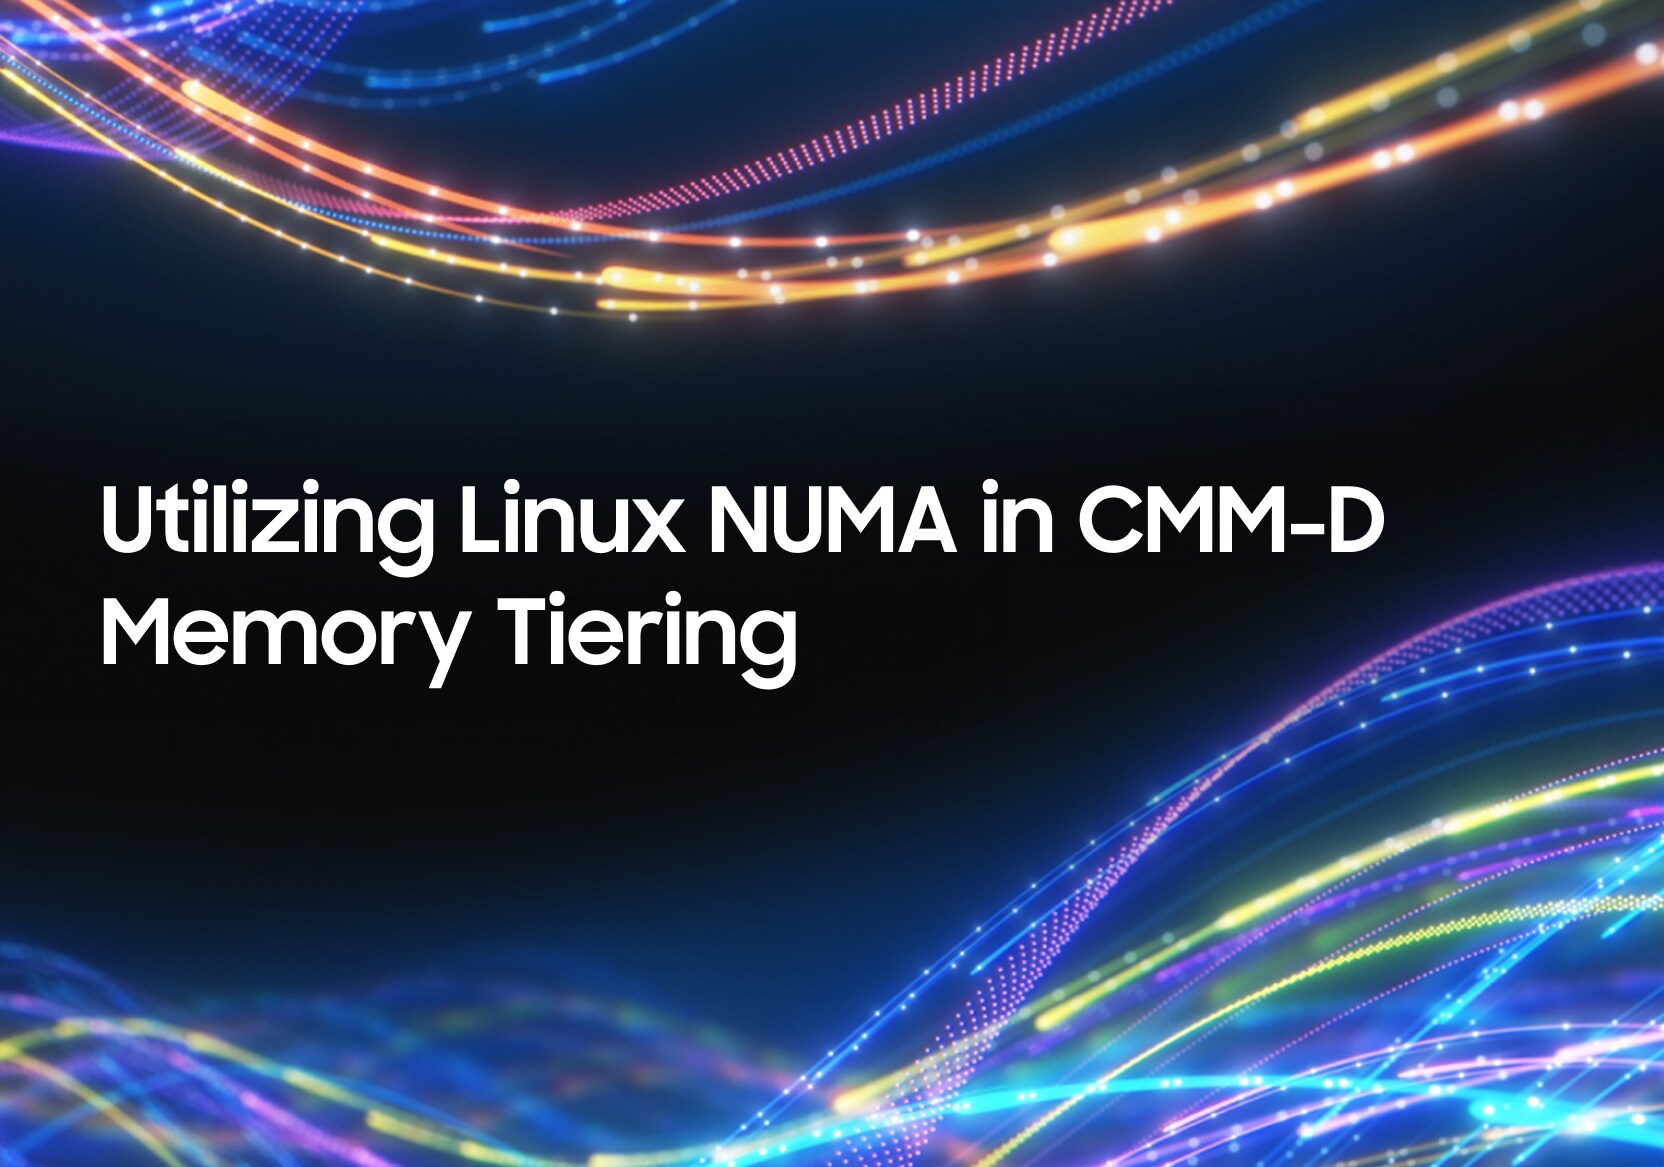 Utilizing Linux NUMA in CMM-D: Memory Tiering